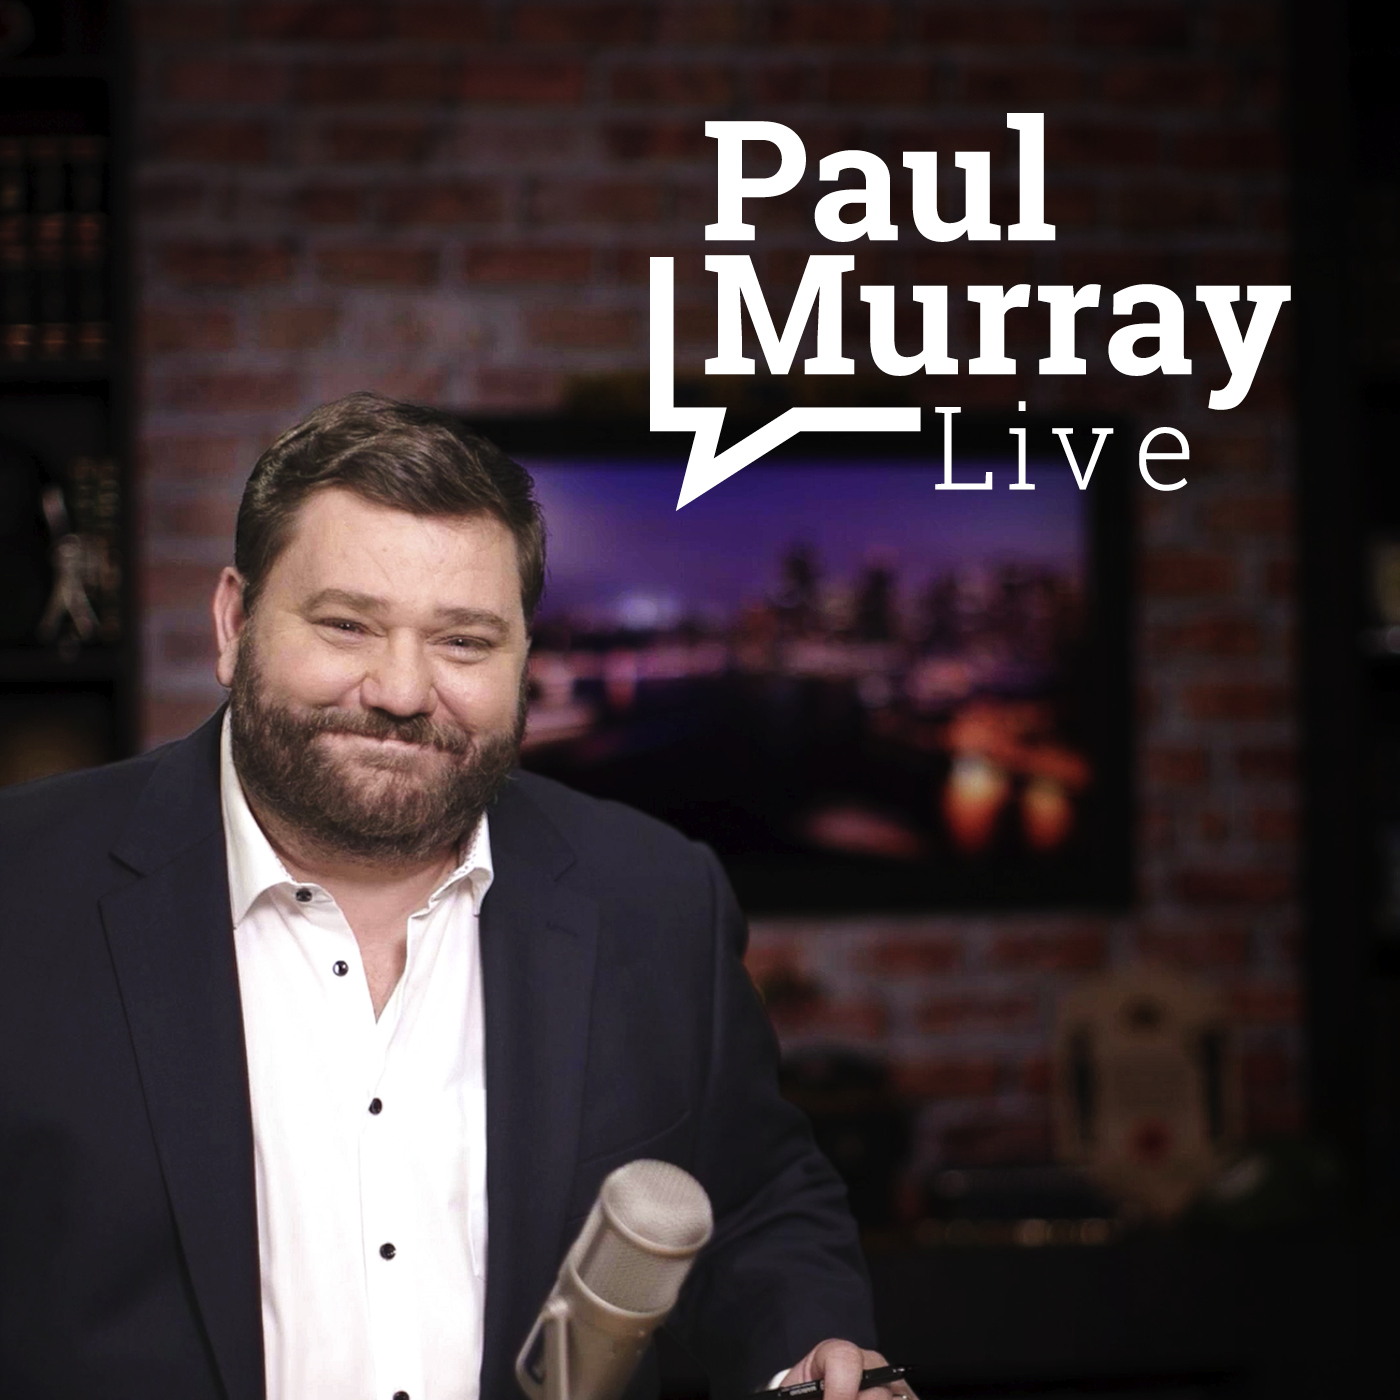 Paul Murray Live, Monday 28 November